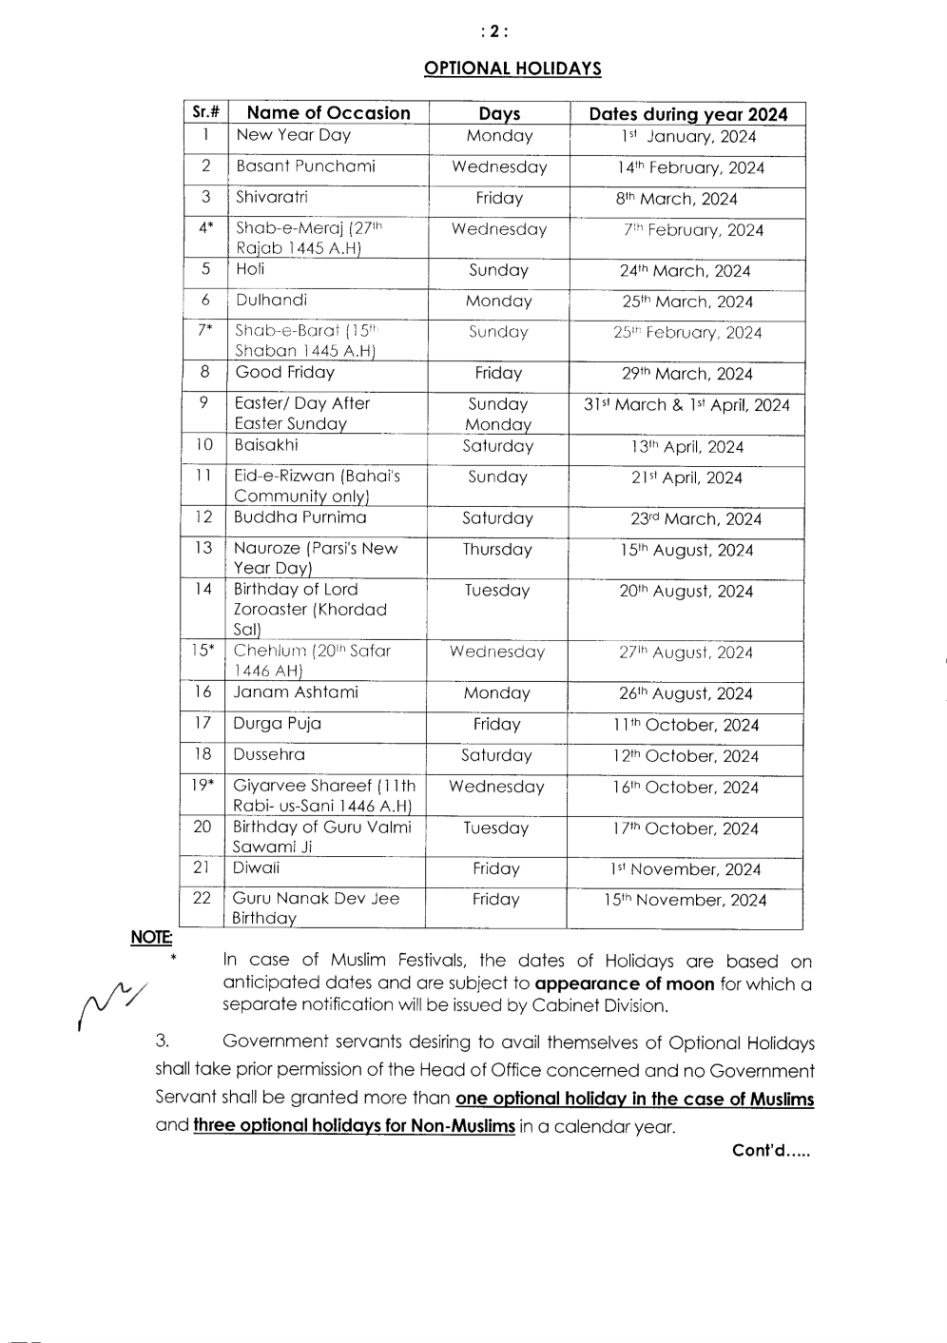 Public Holidays in Pakistan 2024 All Optional & Public Dates Mobiledady